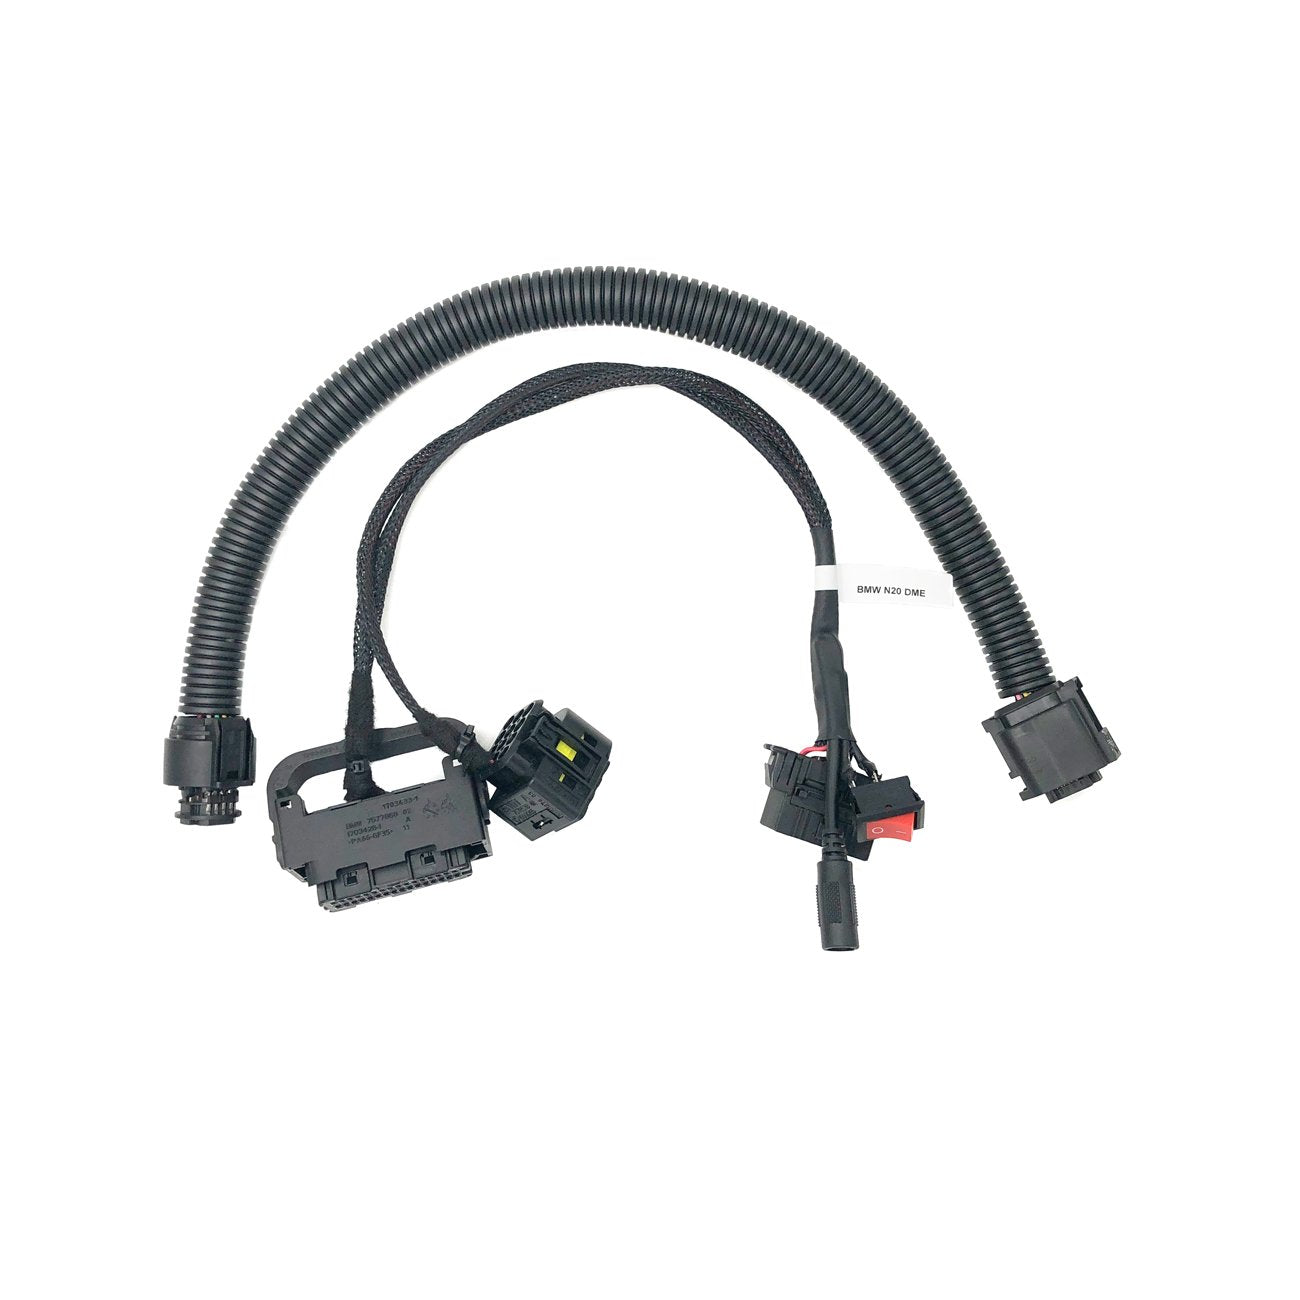 Test Platform Cable for BMW N20 DME valvetronic fault